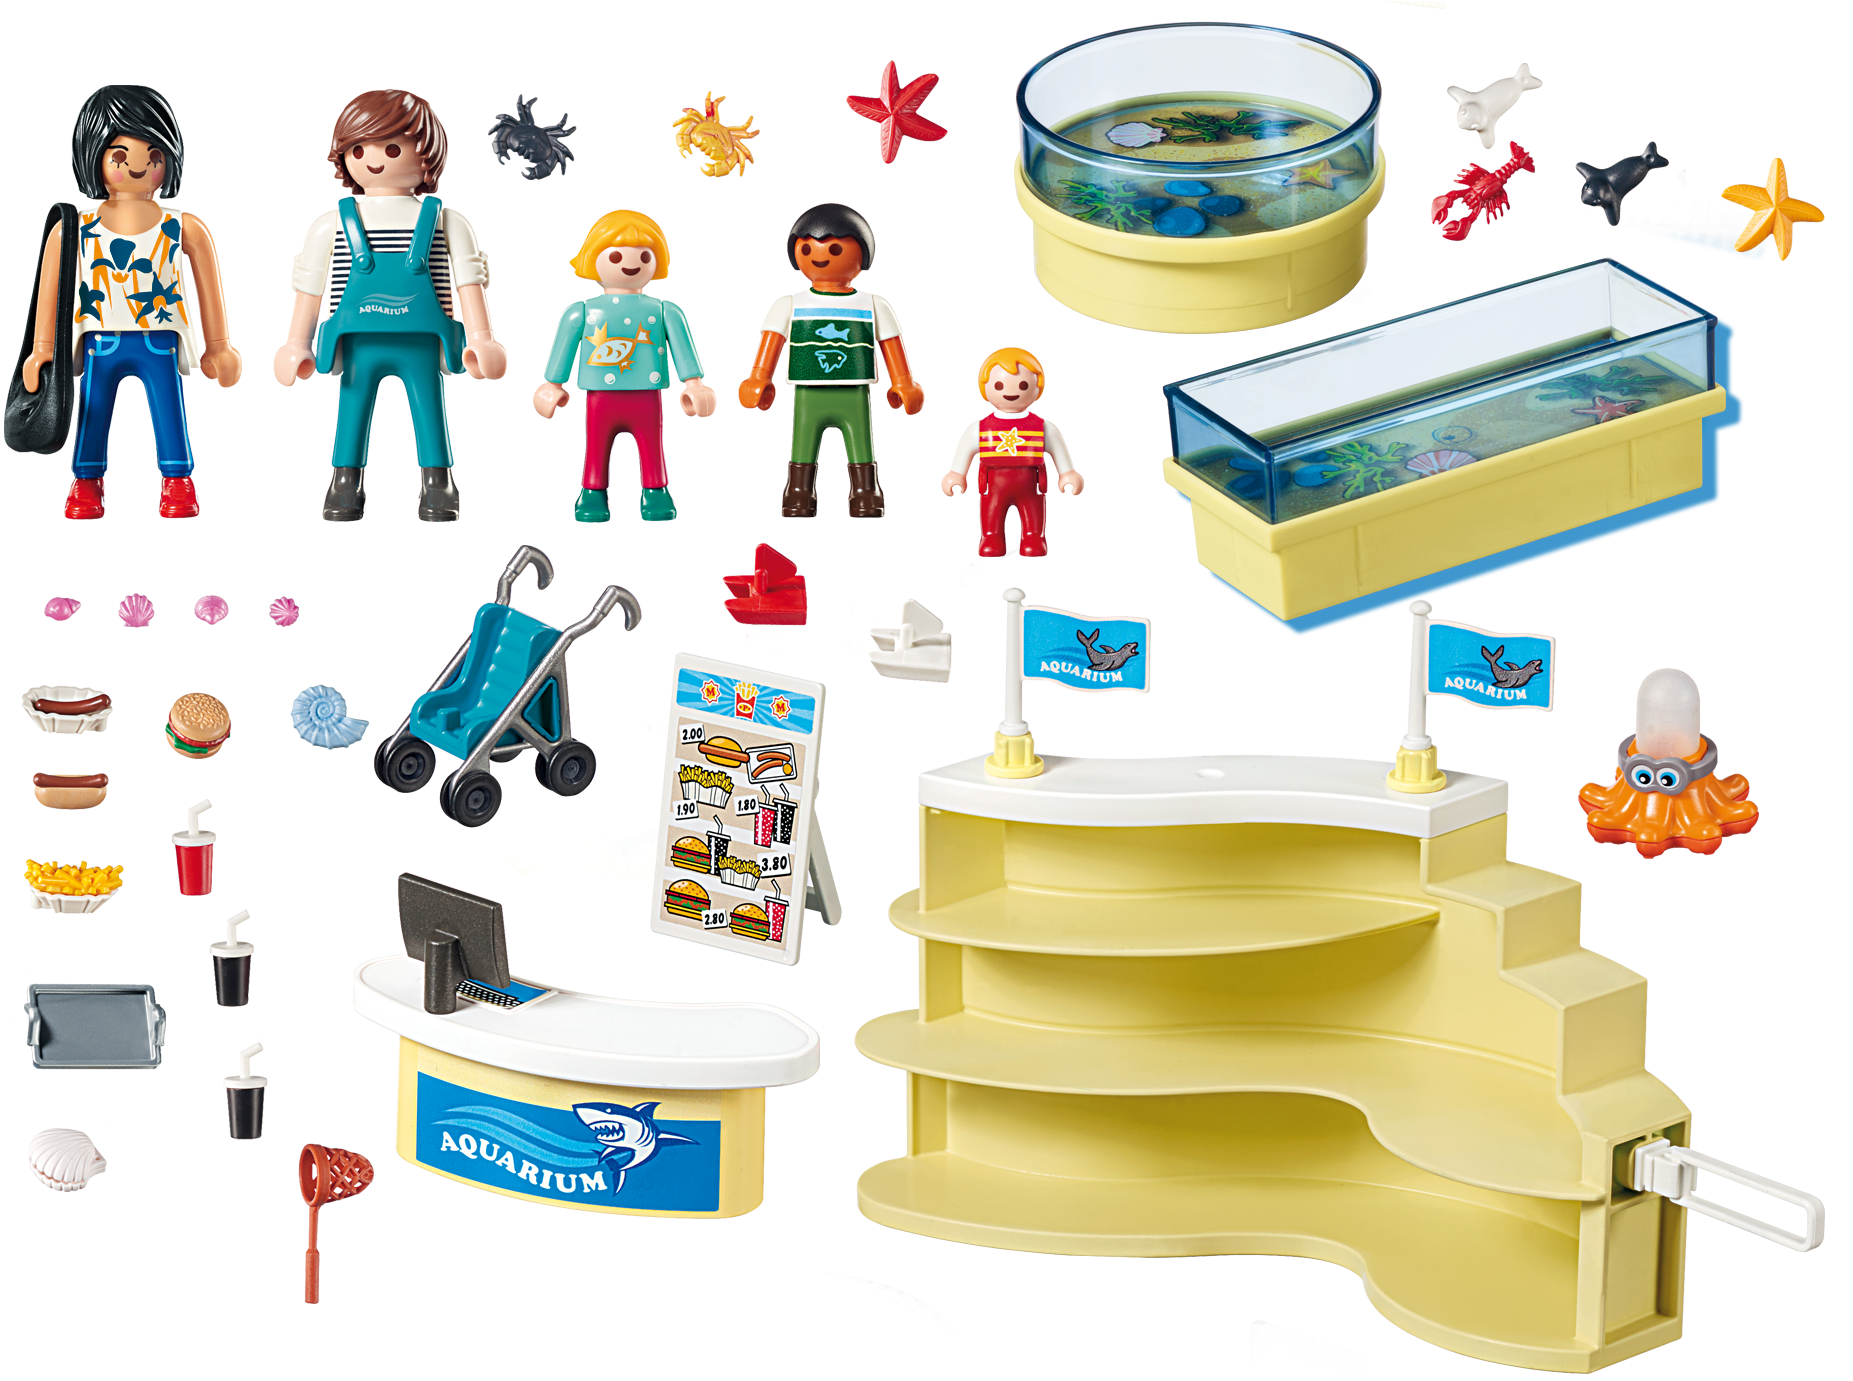 Http - //media - Playmobil - Com/i/playmobil/9061 Product - Aquarium Playmobil 9061 (2000x1400)